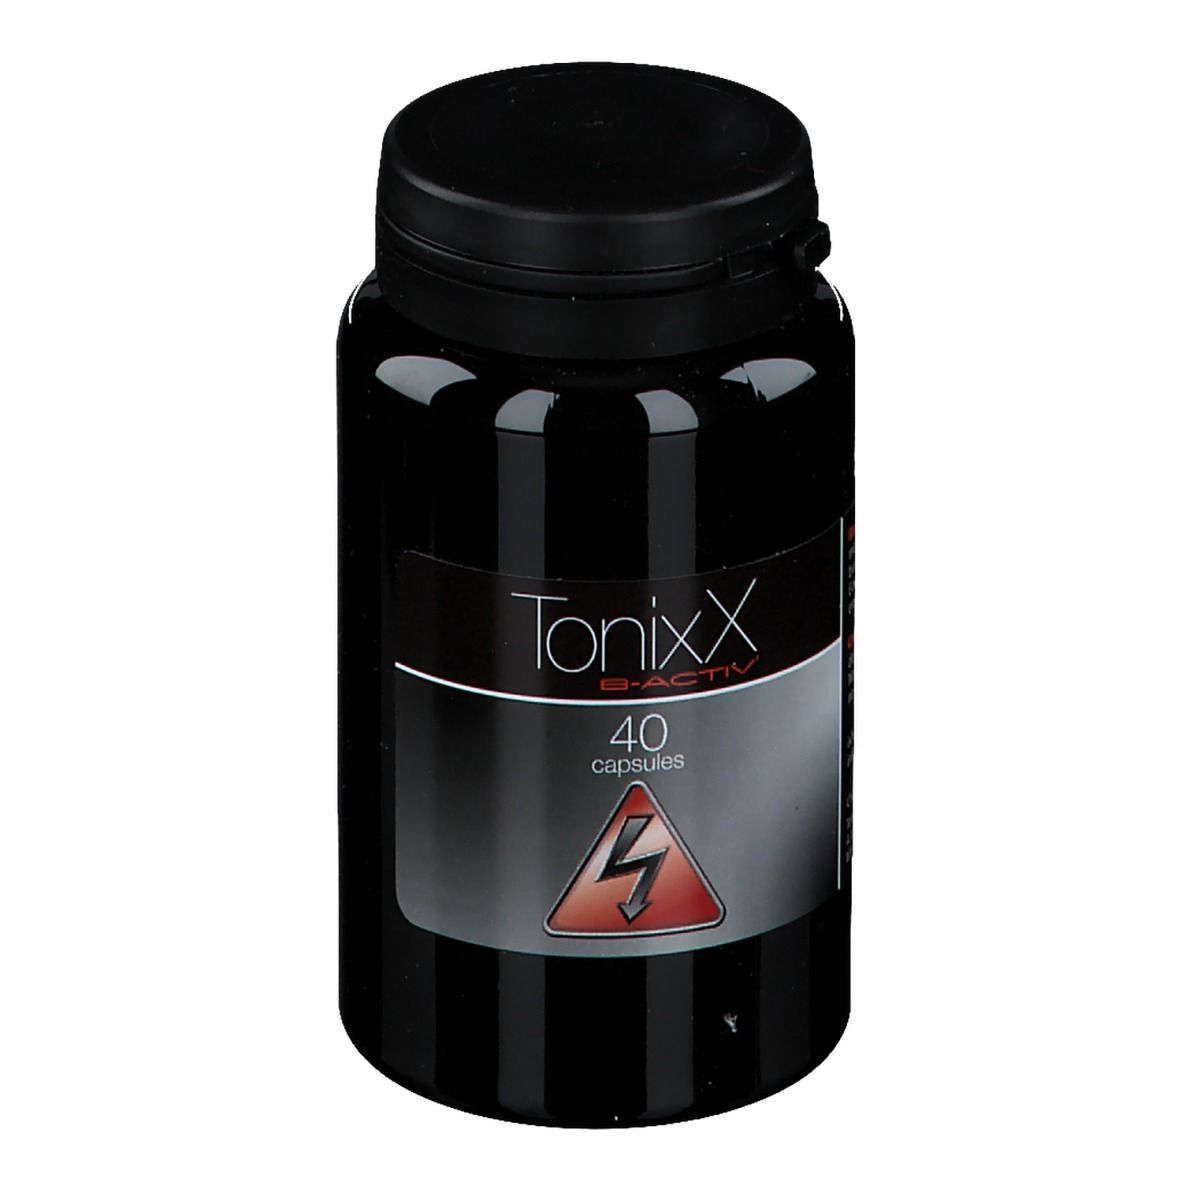 TonixX B-Active